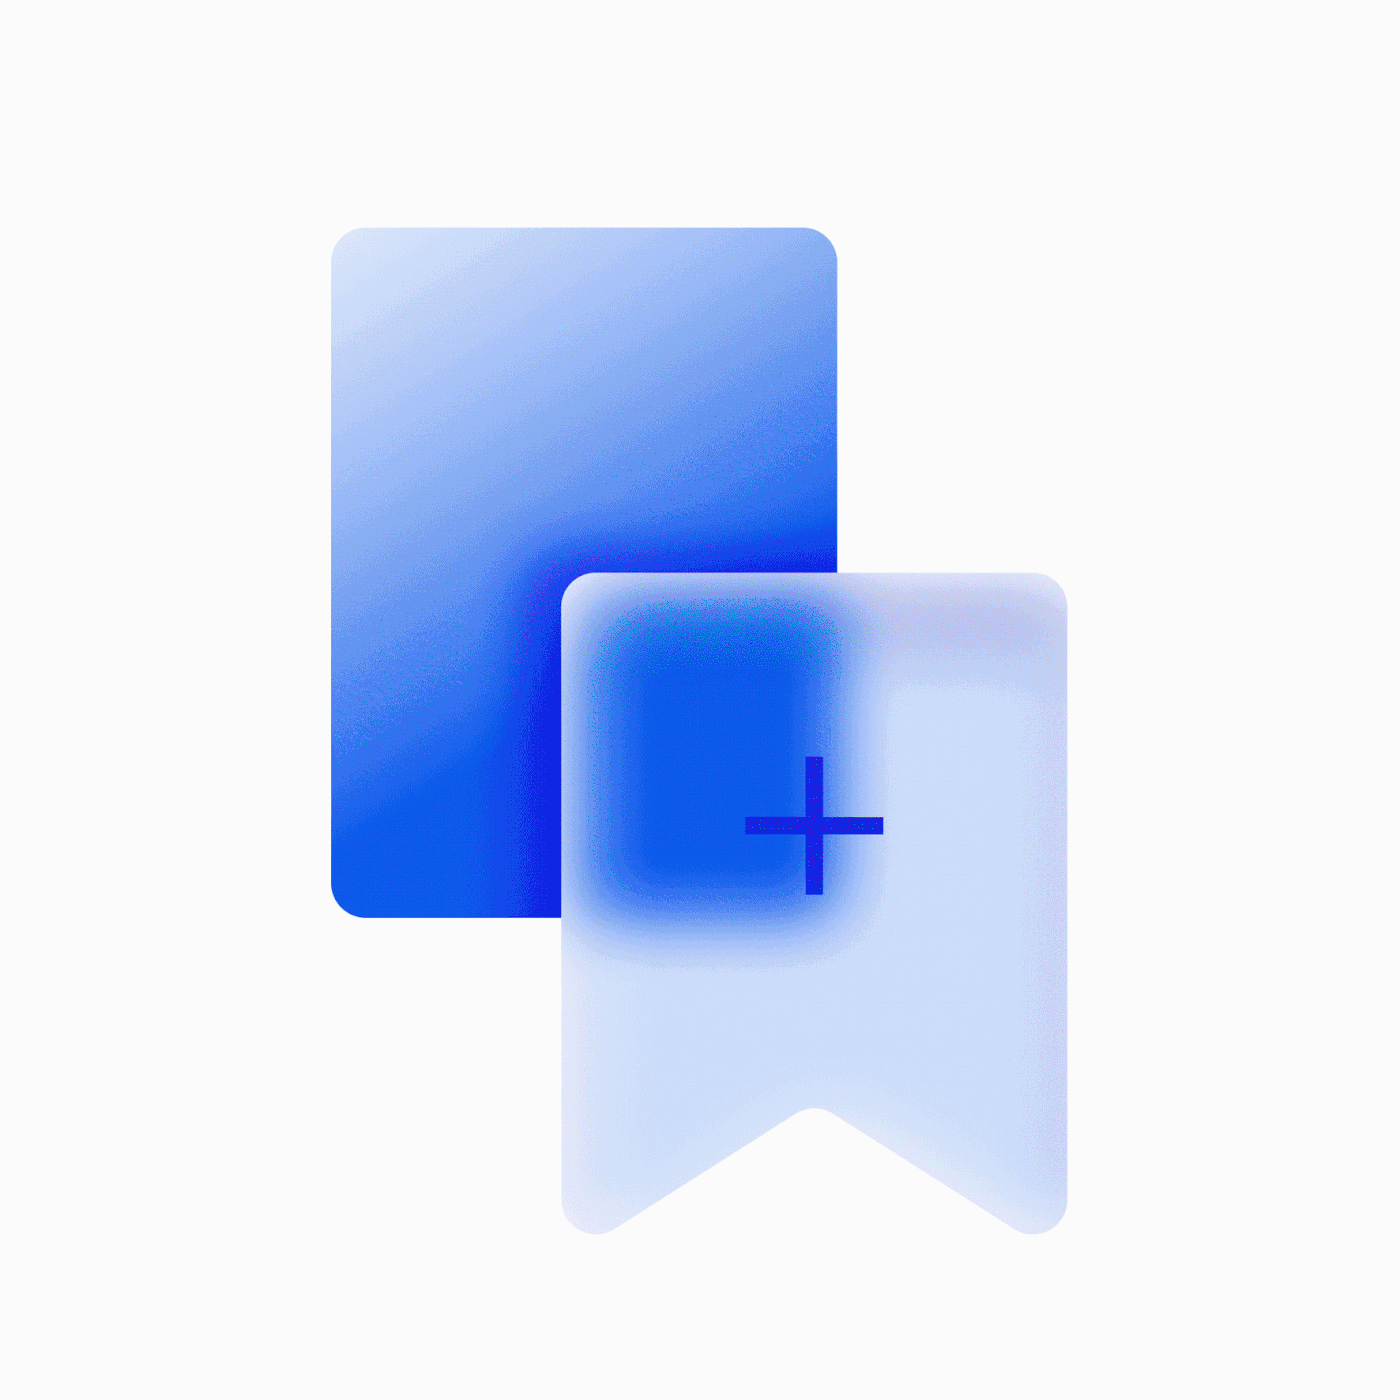 Icon glassmorphism iconset UI/UX Figma app design Icondesign iconography Logo Design icons